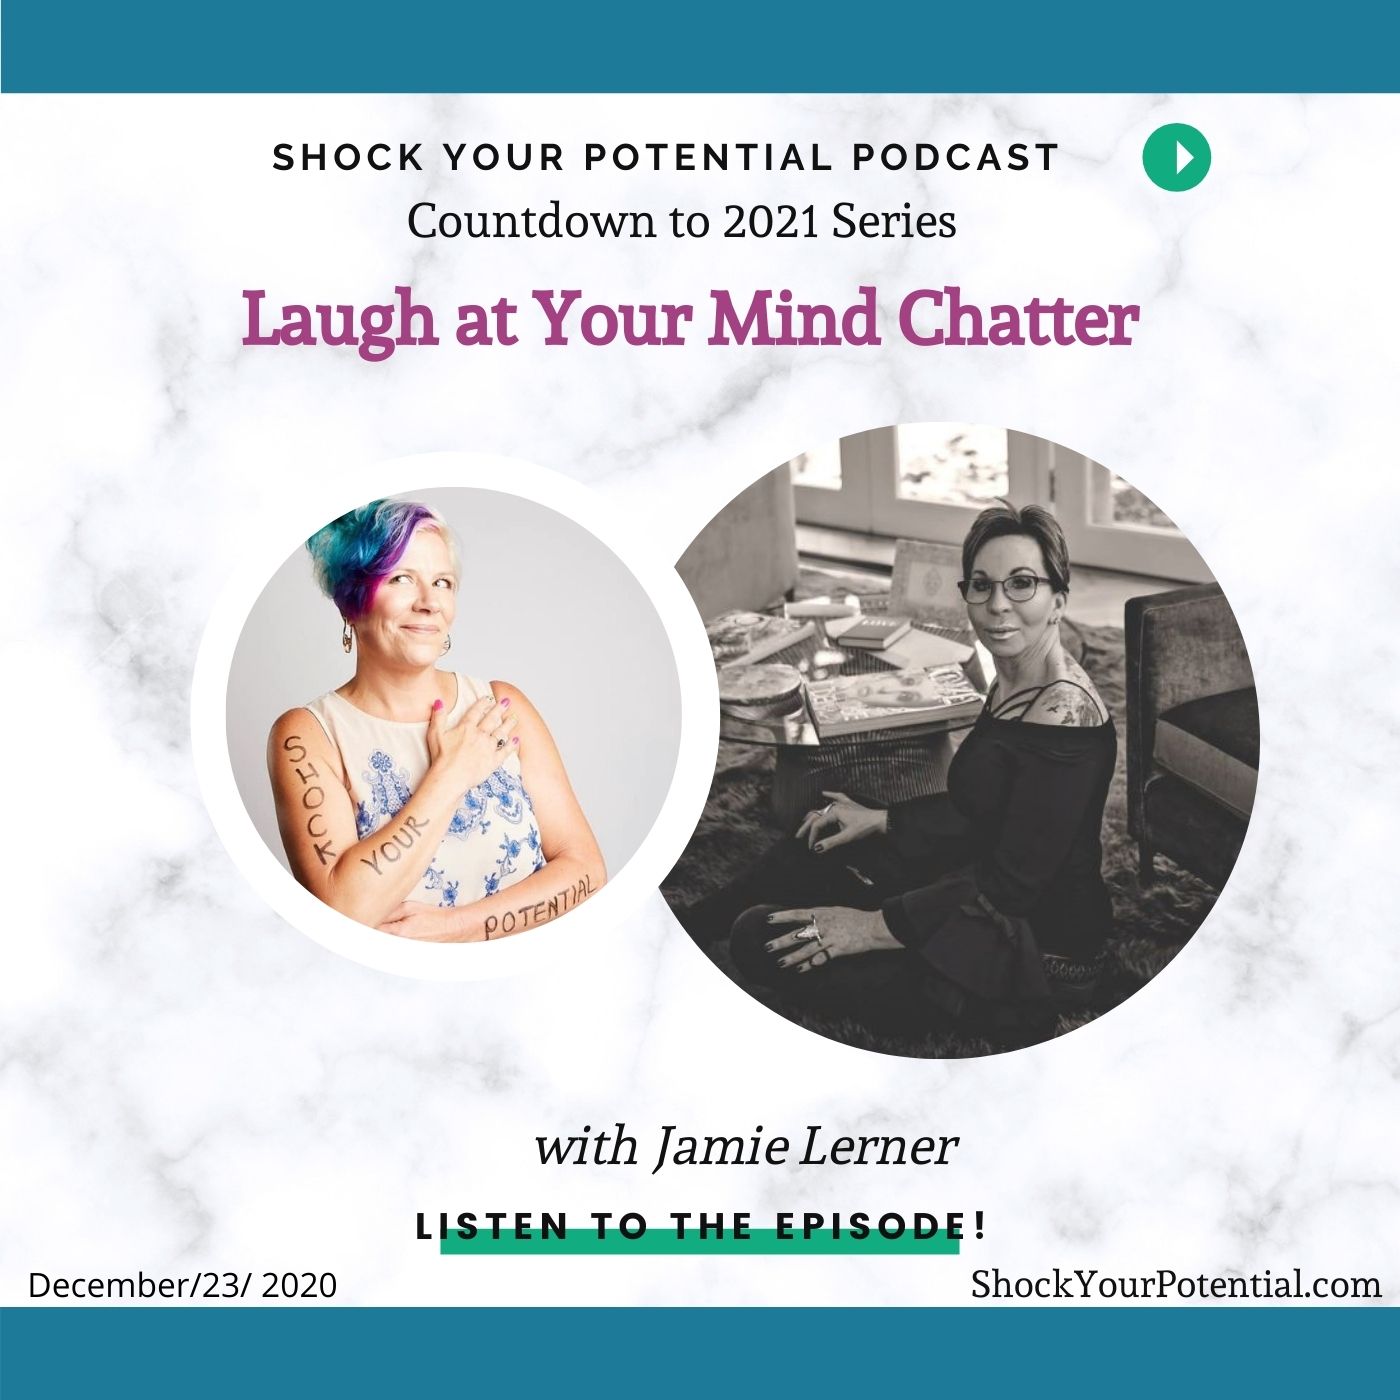 Laugh at Your Mind Chatter – Jamie Lerner